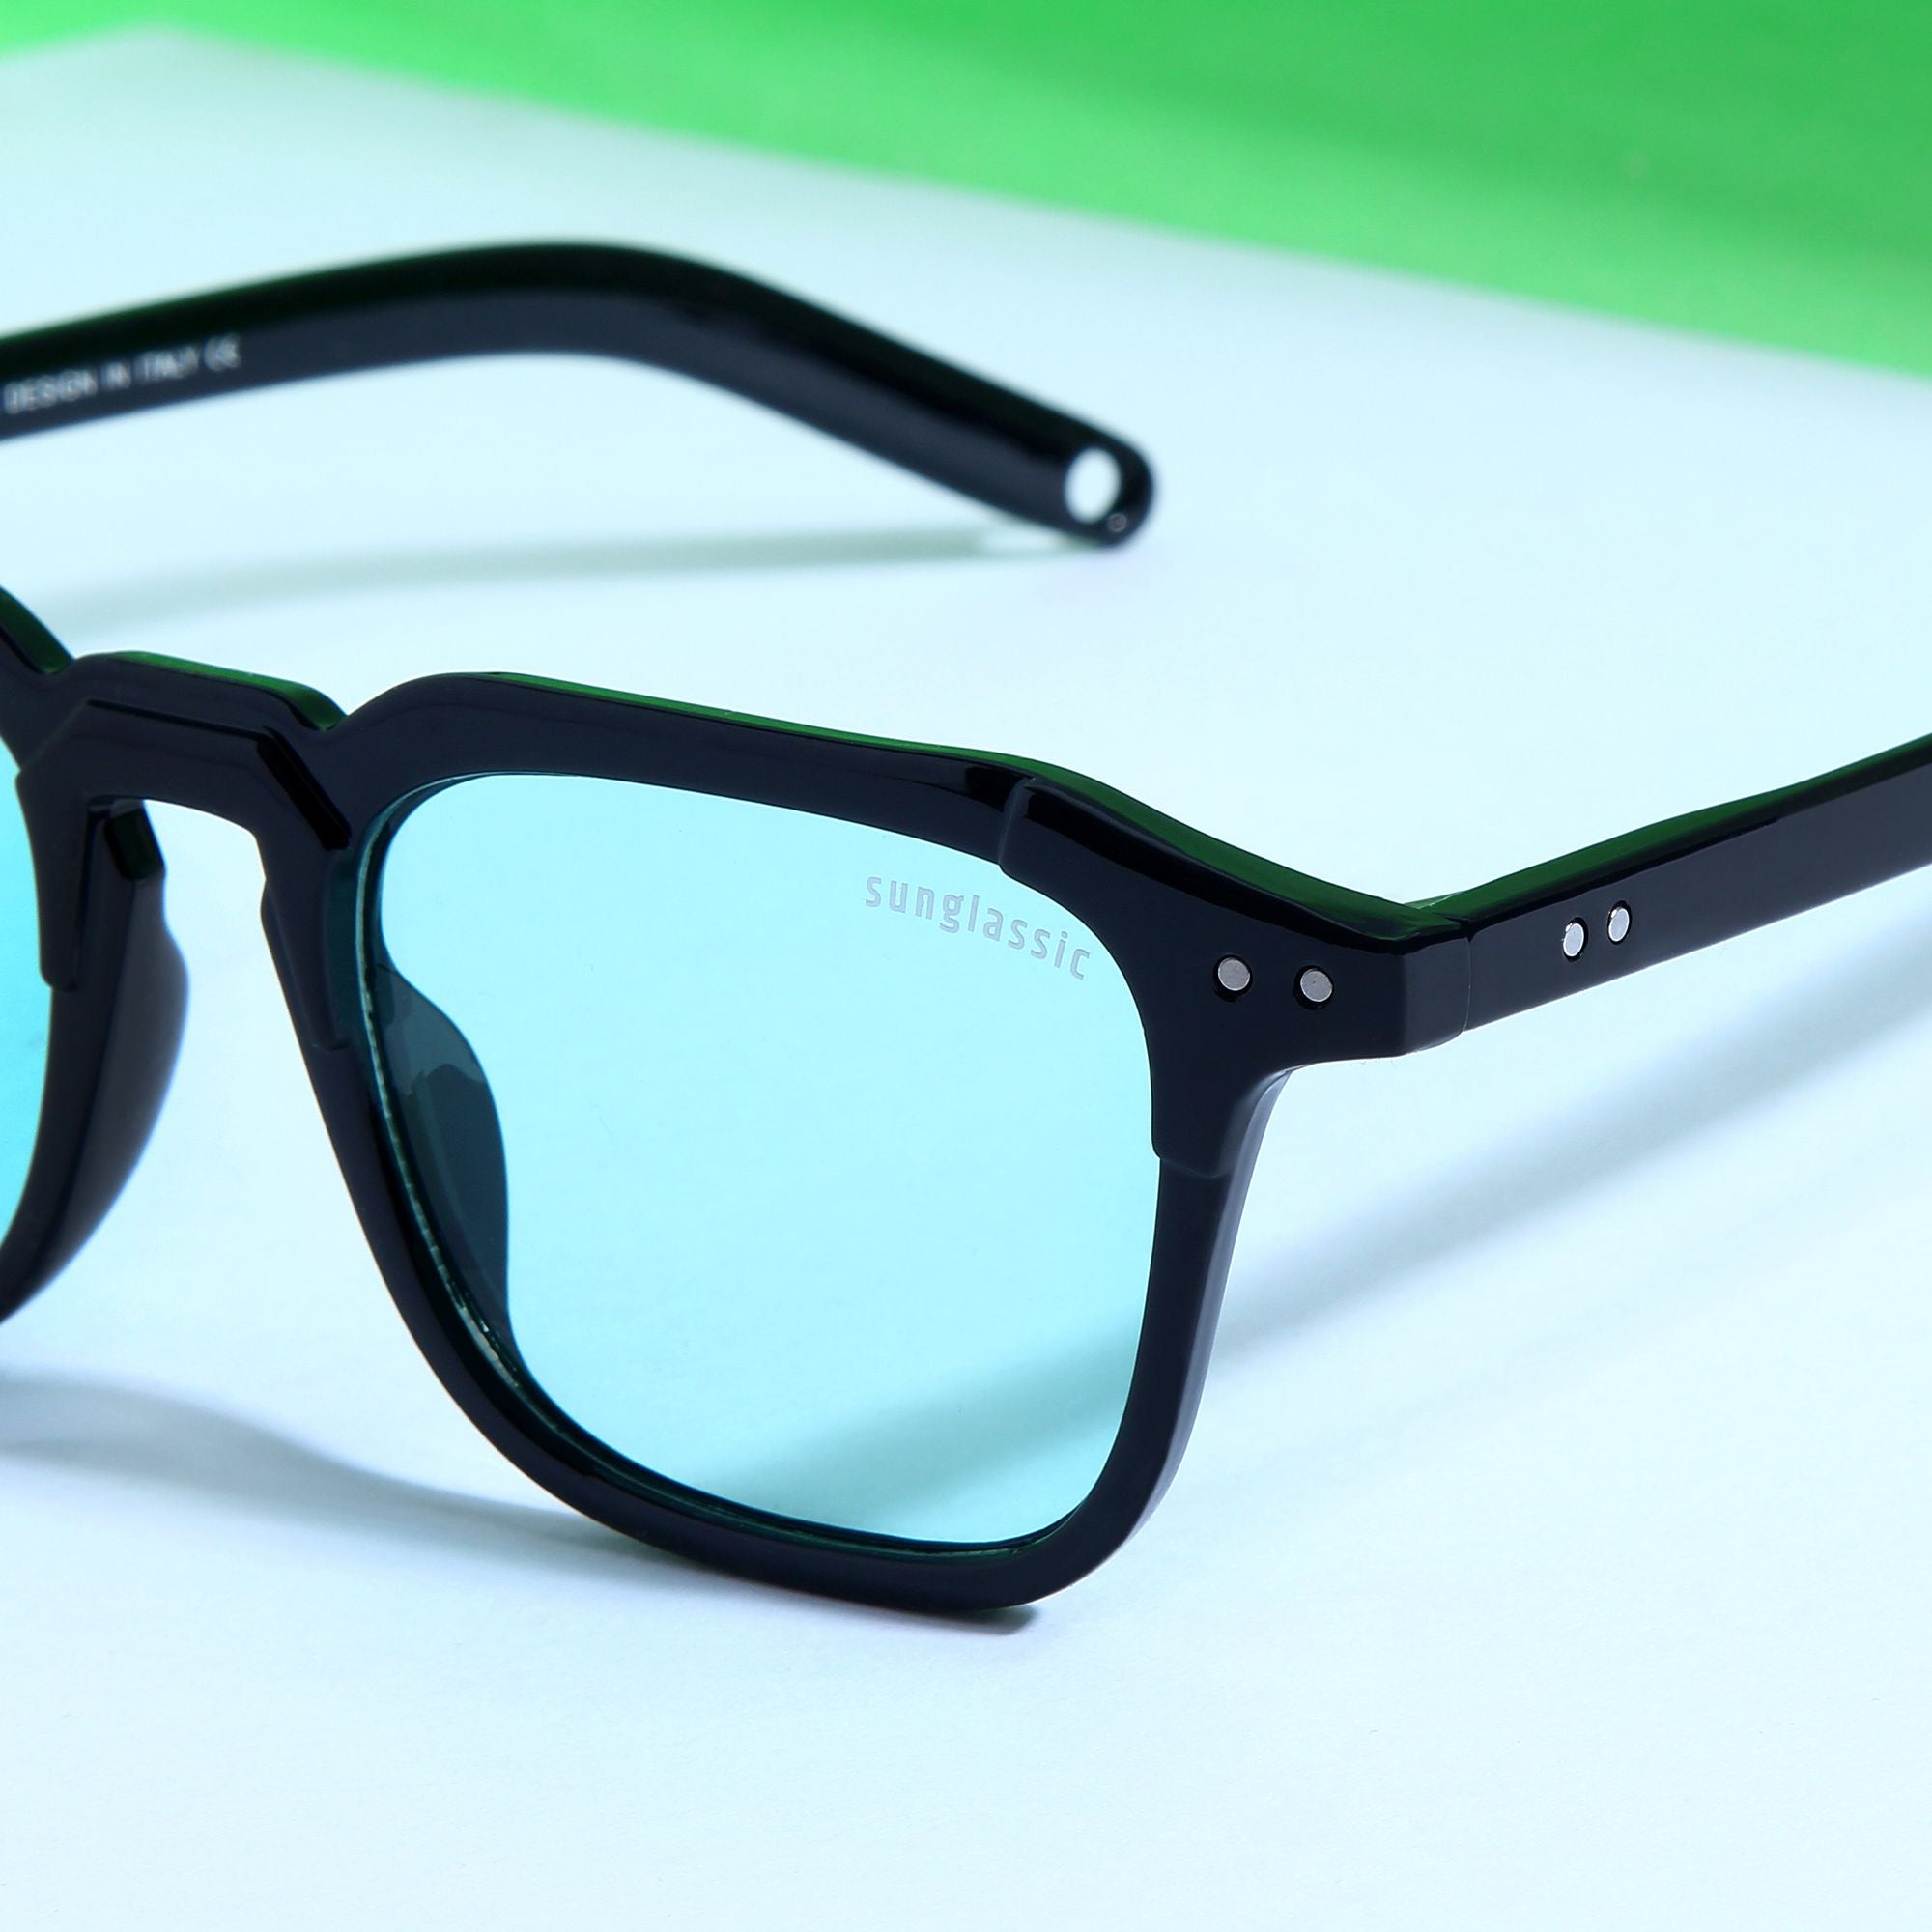 Kingsman black green square sunglasses close-up - Sunglassic